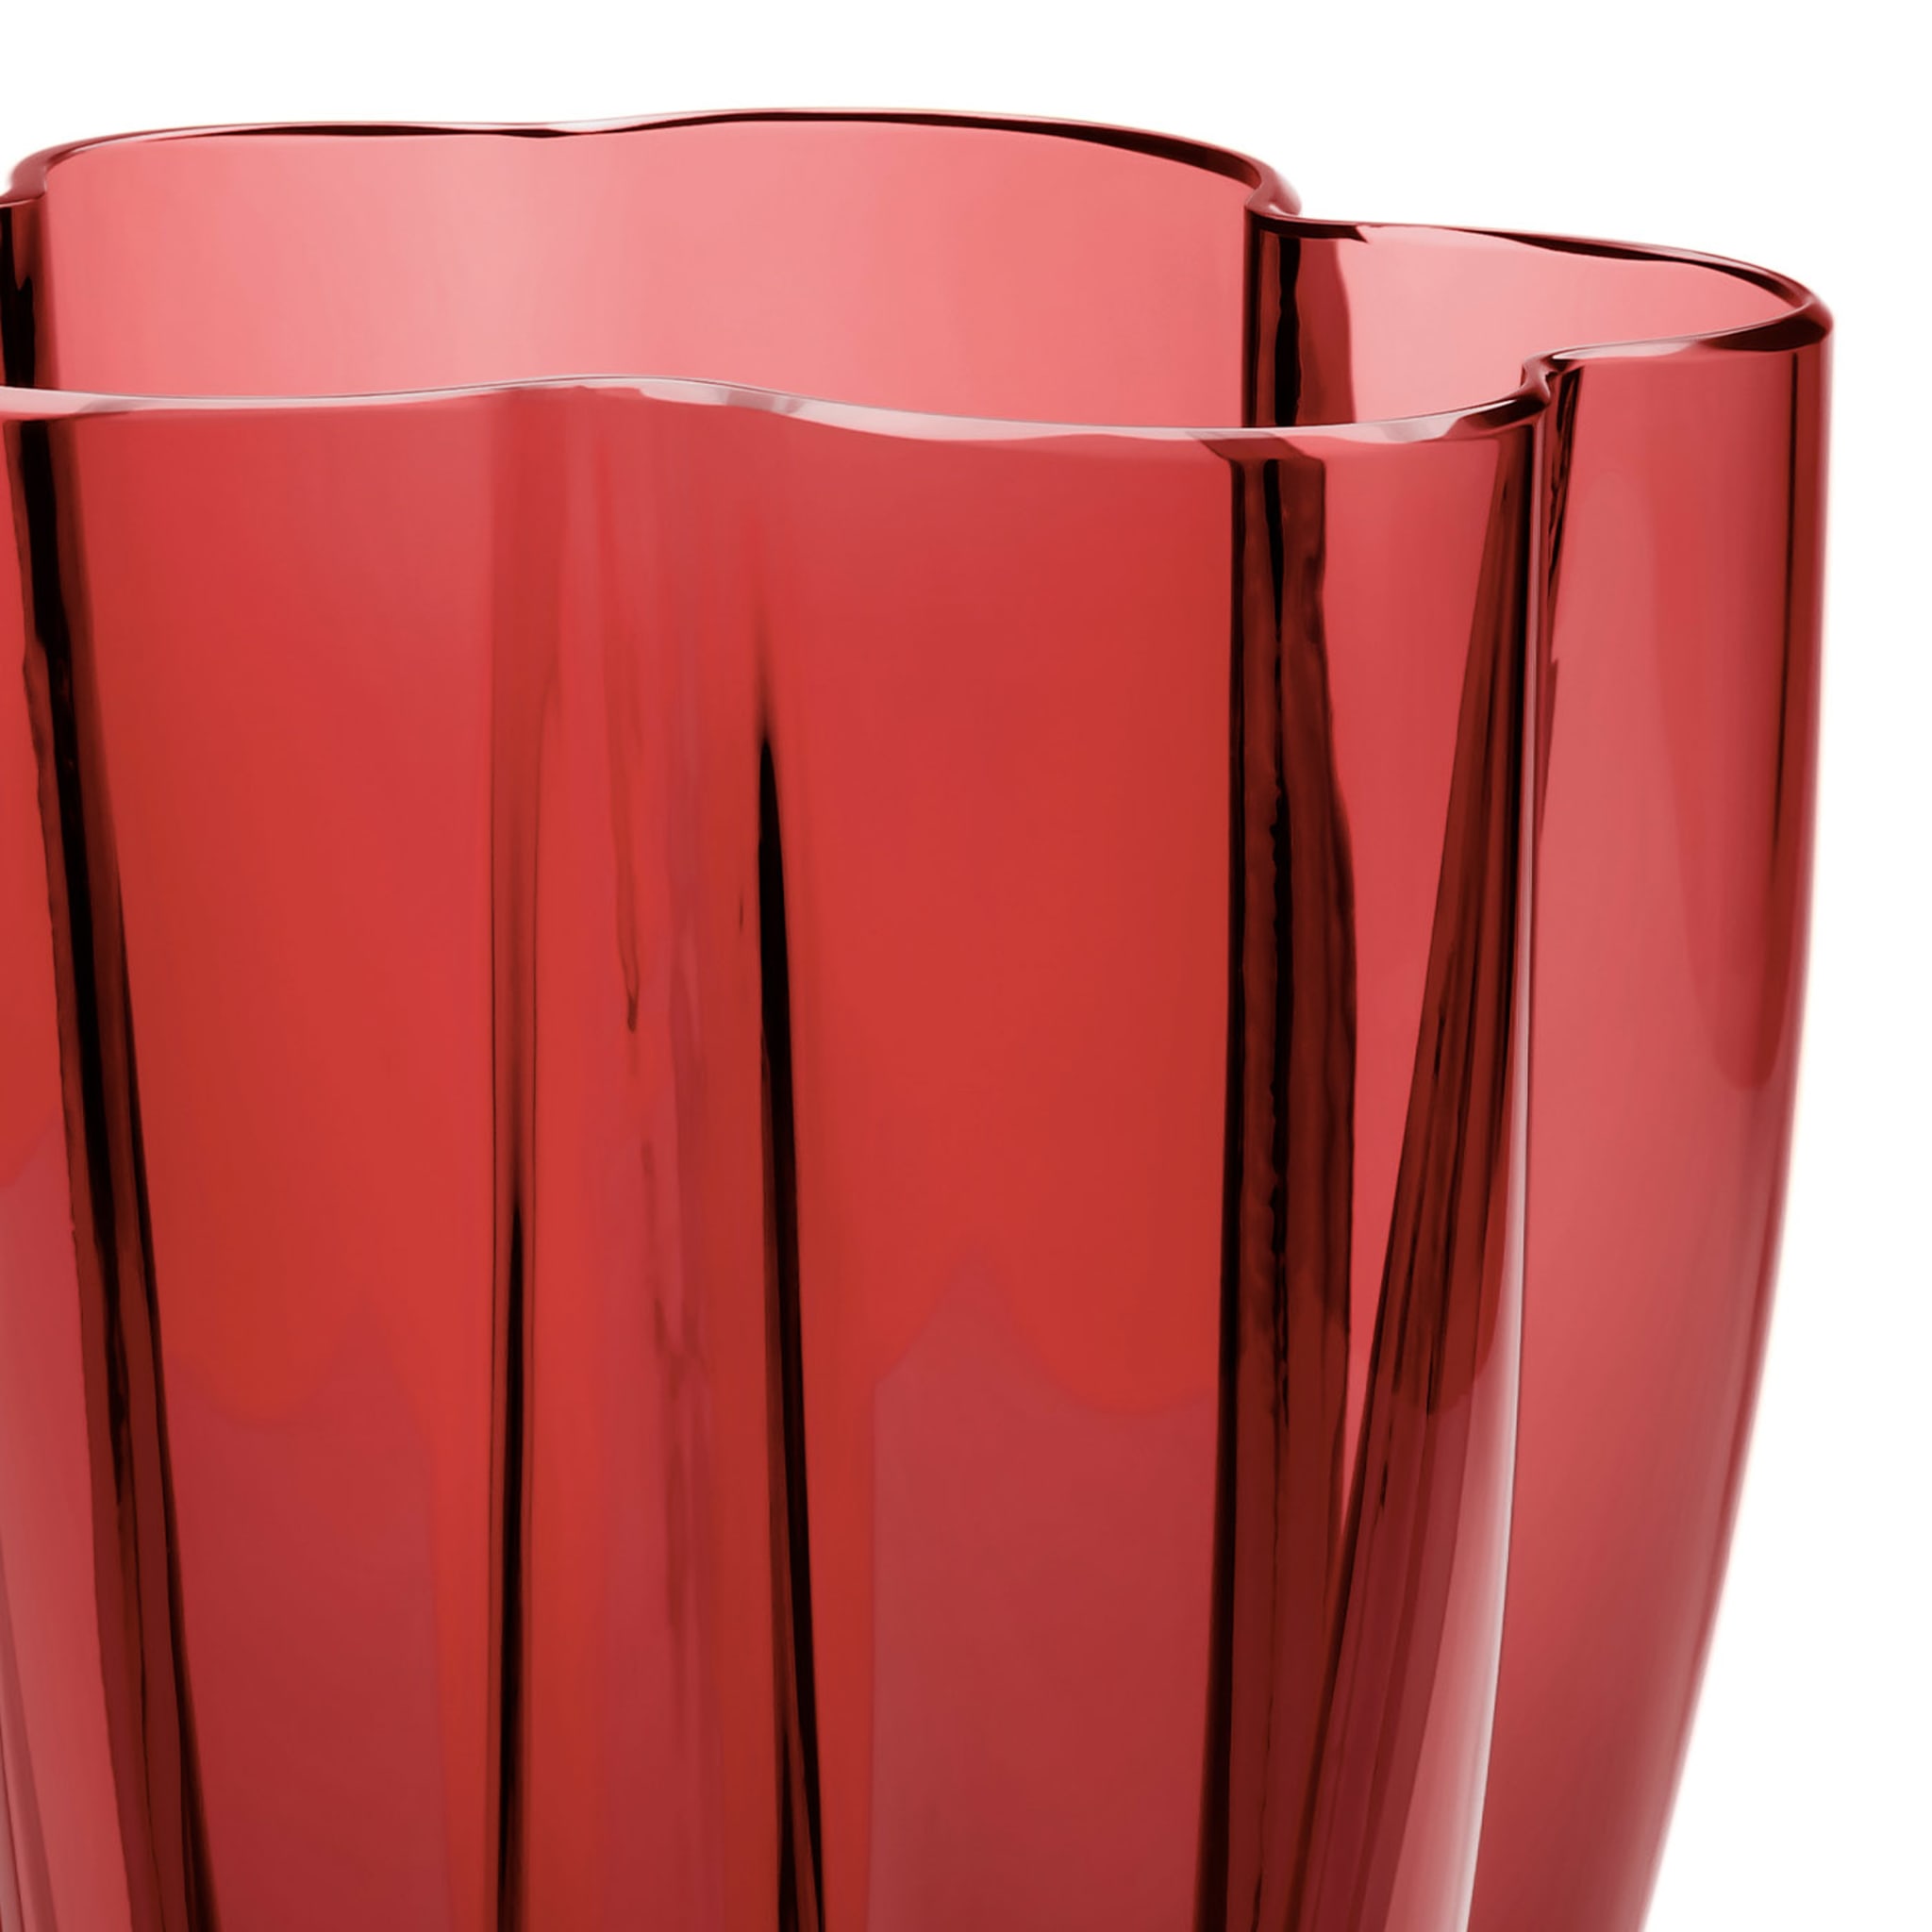 Petalo Oriental Red Small Vase - Alternative view 1